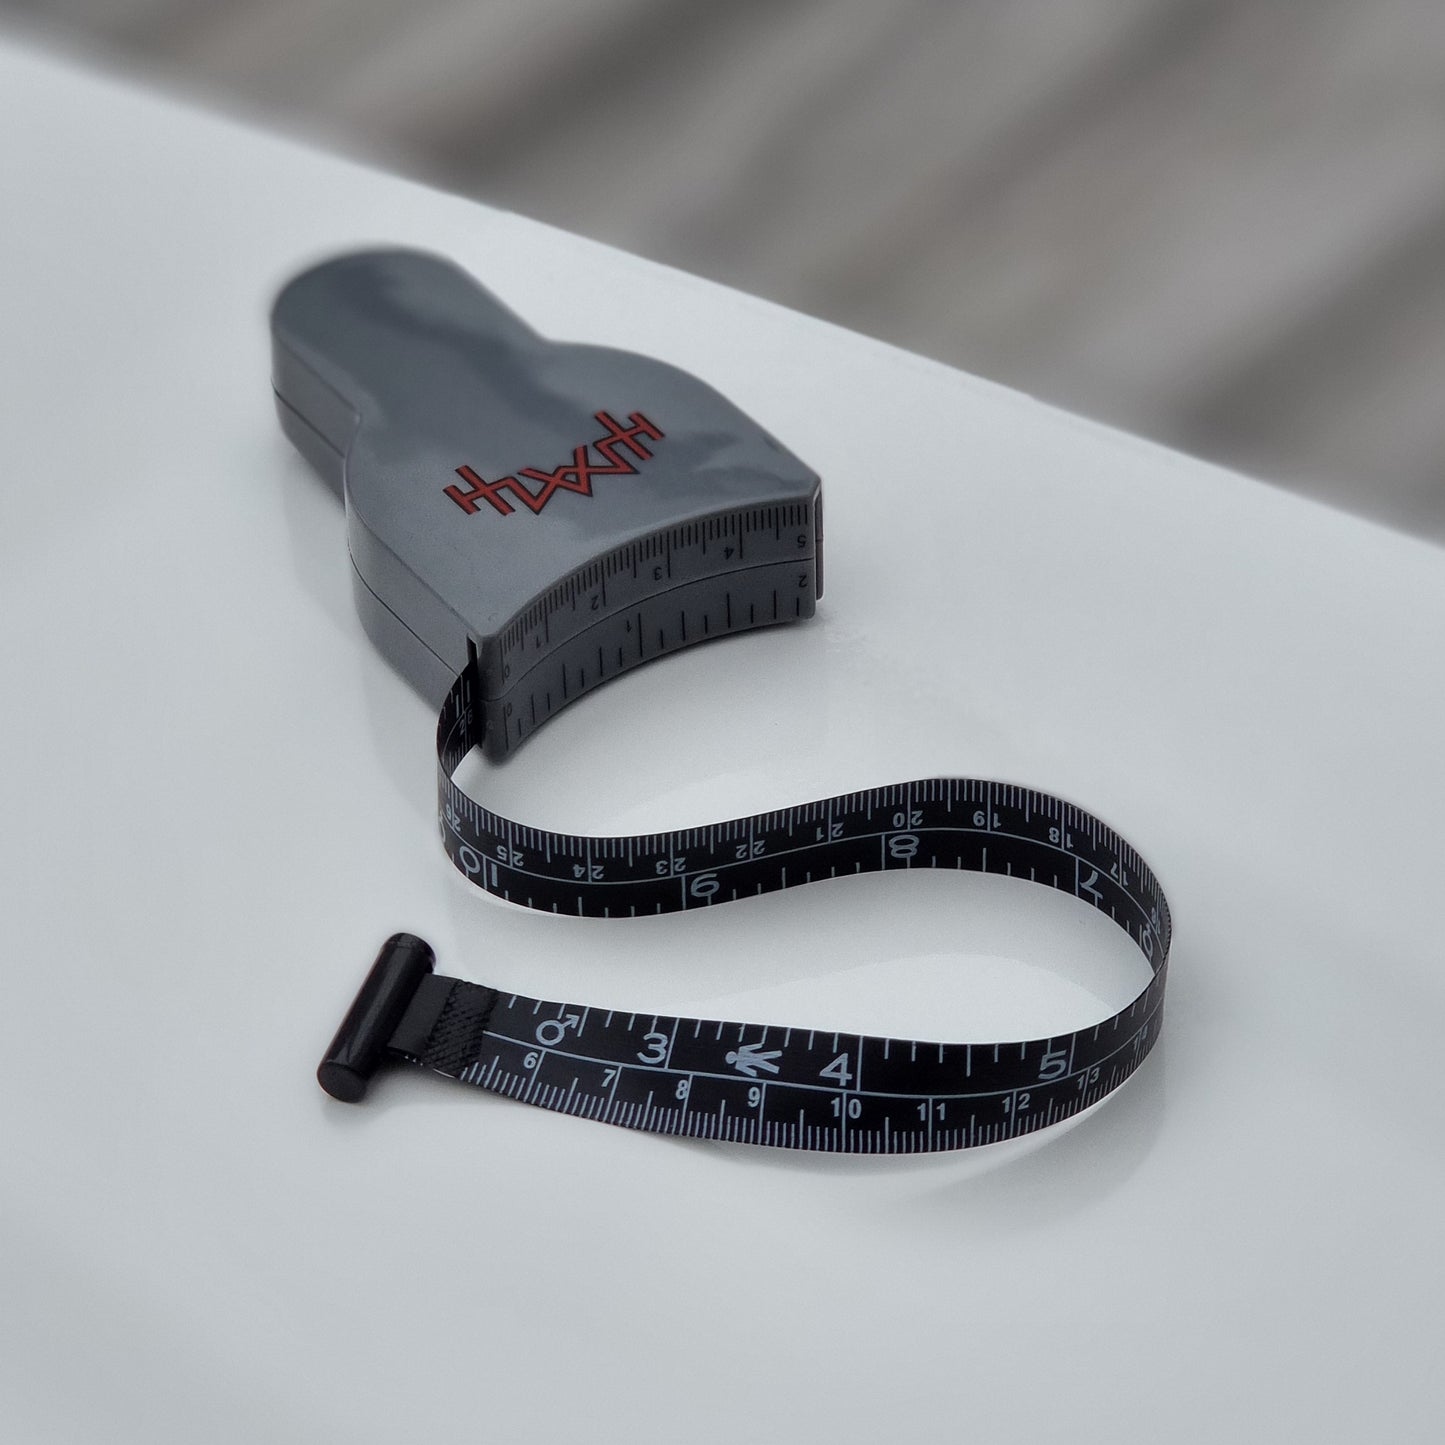 body tape measure